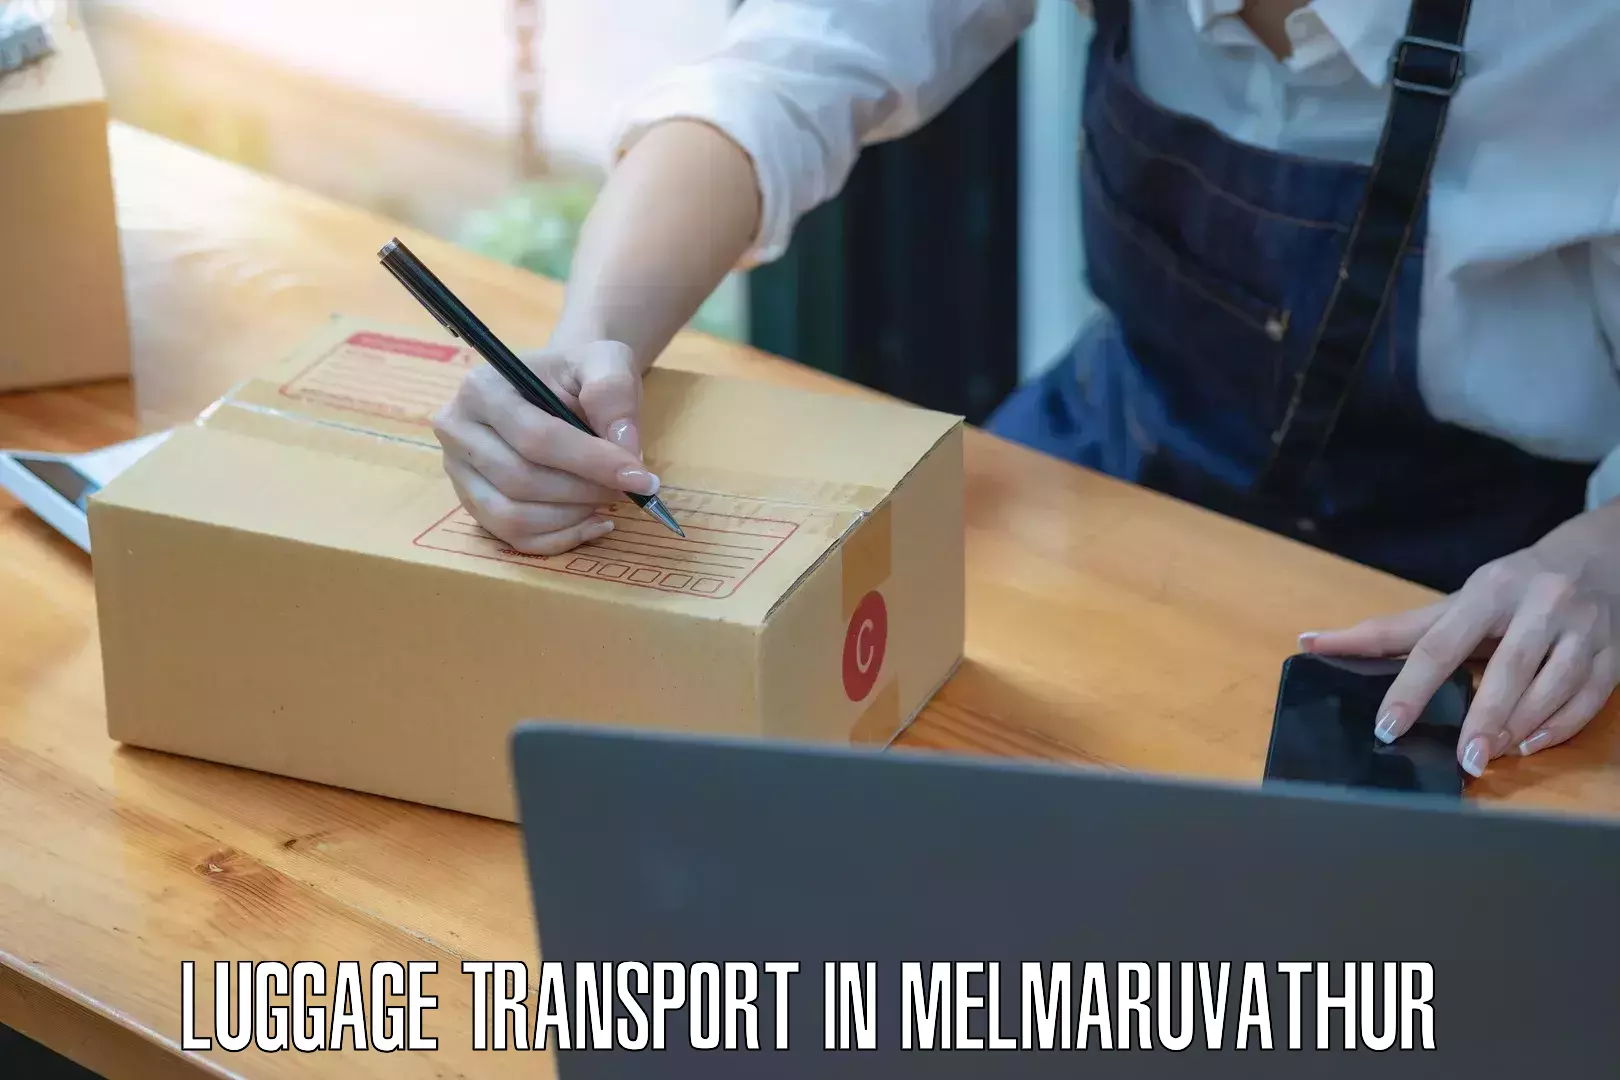 Domestic luggage transport in Melmaruvathur